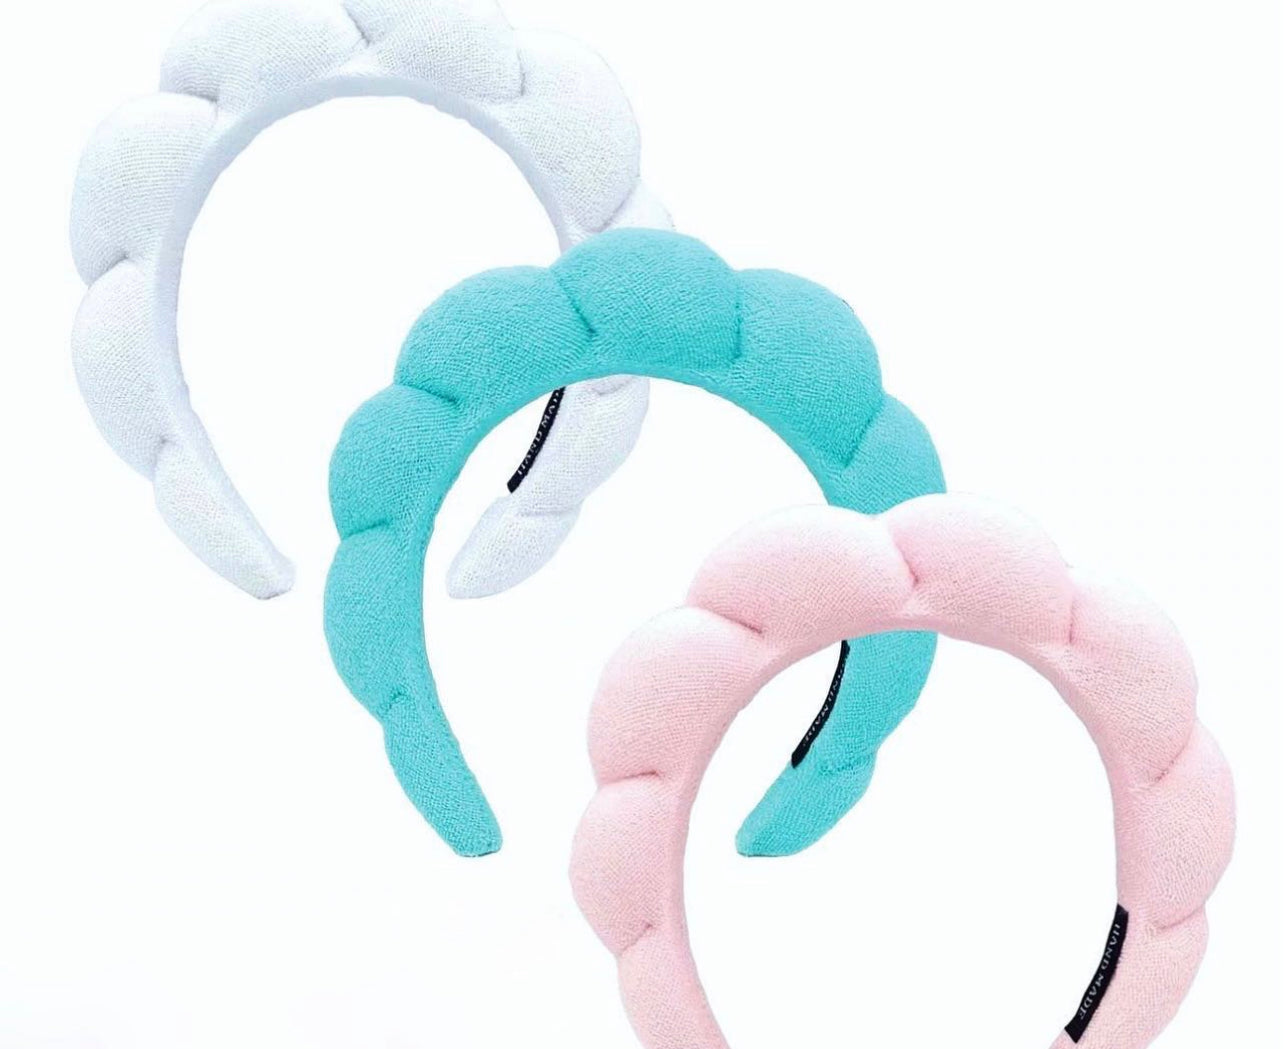 Mavi Spa Headband, Pink, Turquoise, White